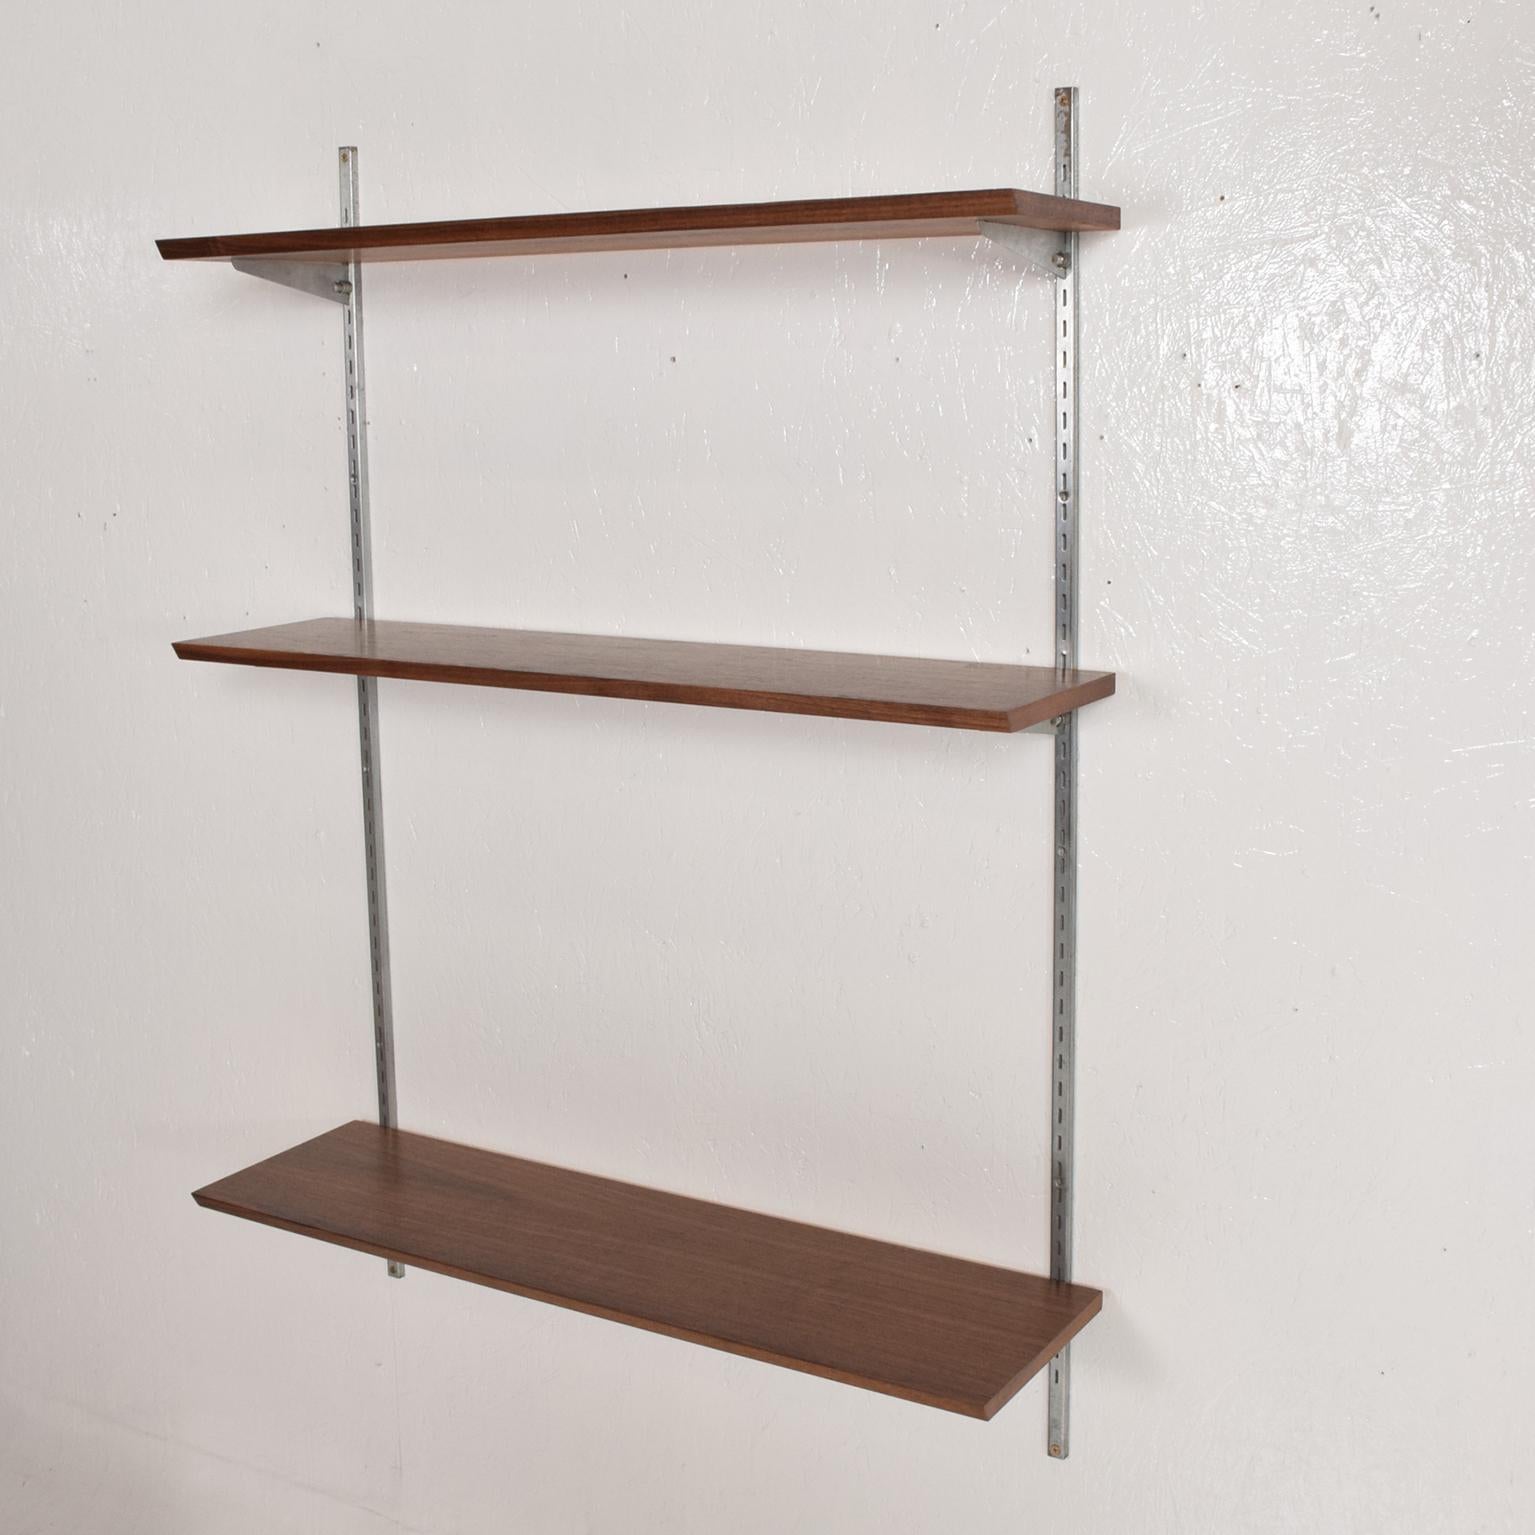 American Mid-Century Modern Bookcase Shelving Wall Unit, One Bay, Walnut & Aluminum Eames